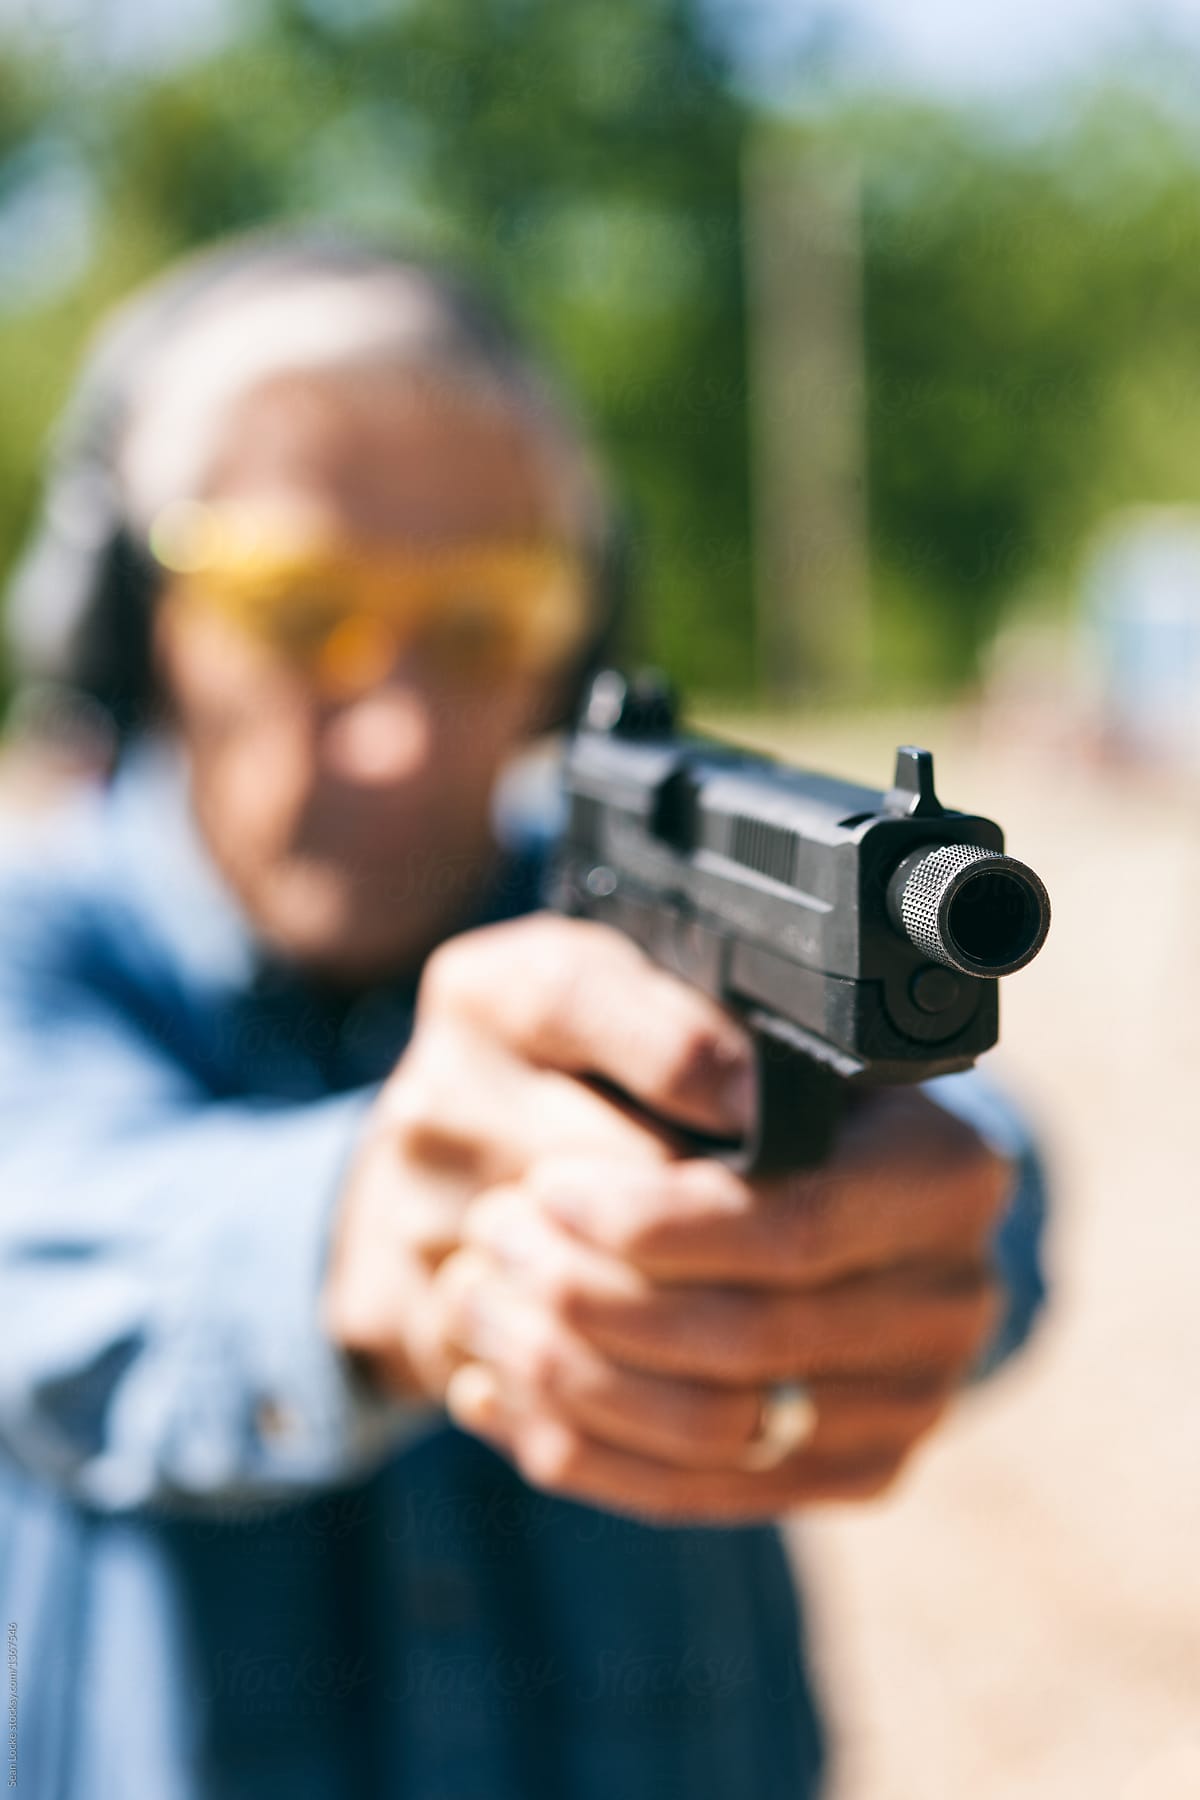 Shooting: Focus On Barrel Of Semi-Automatic Handgun